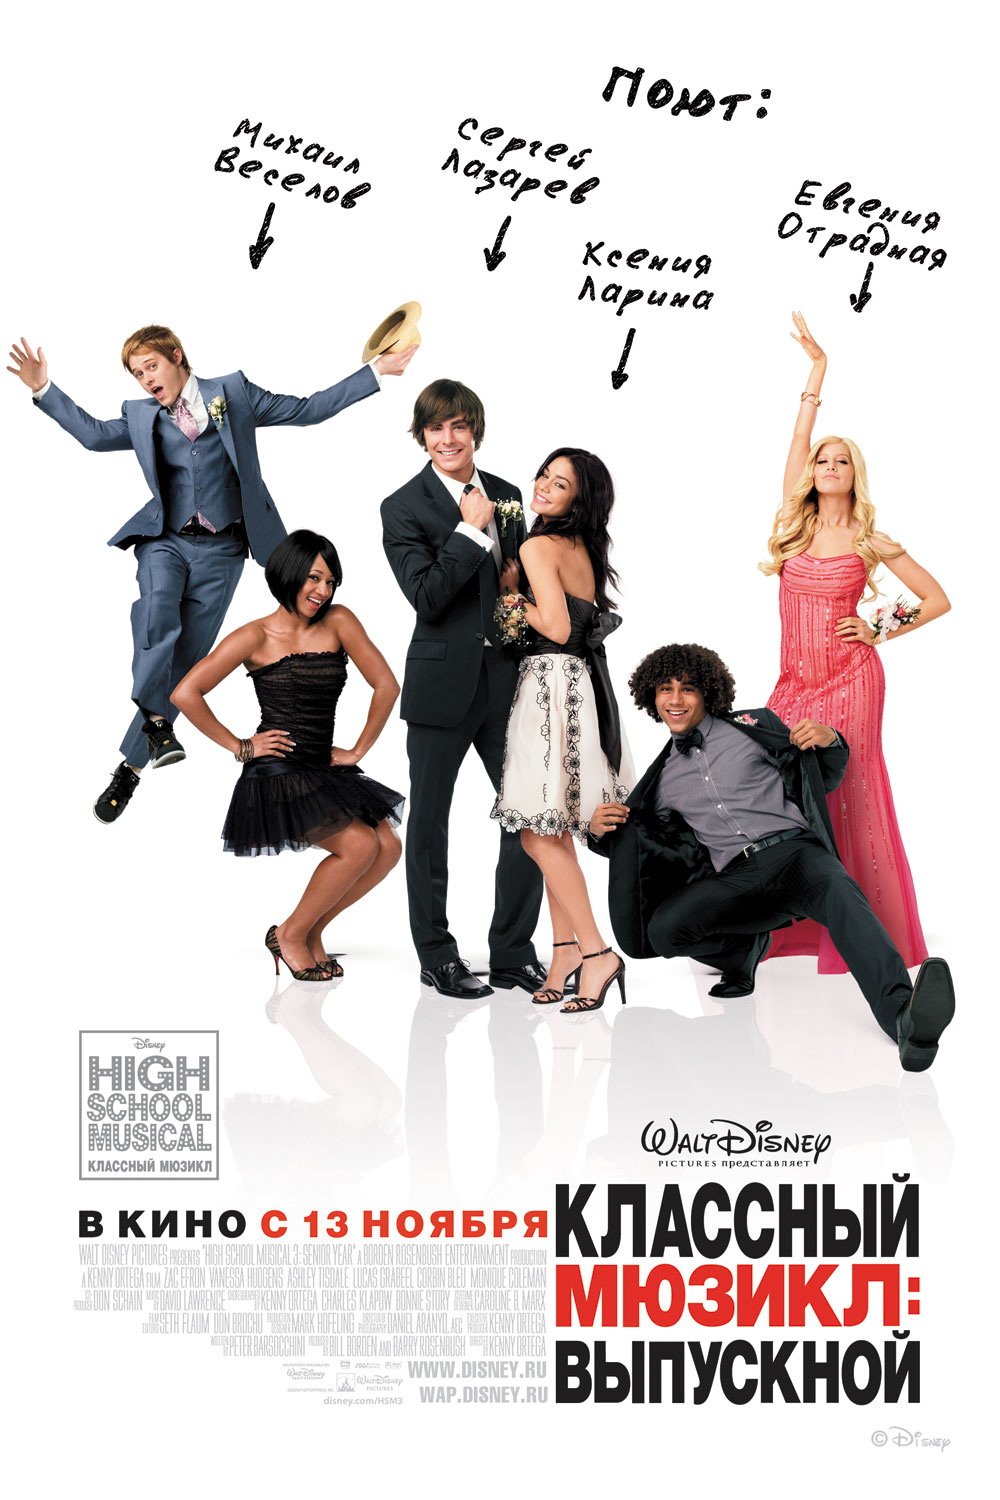 2008 High School Musical 3: Senior Year